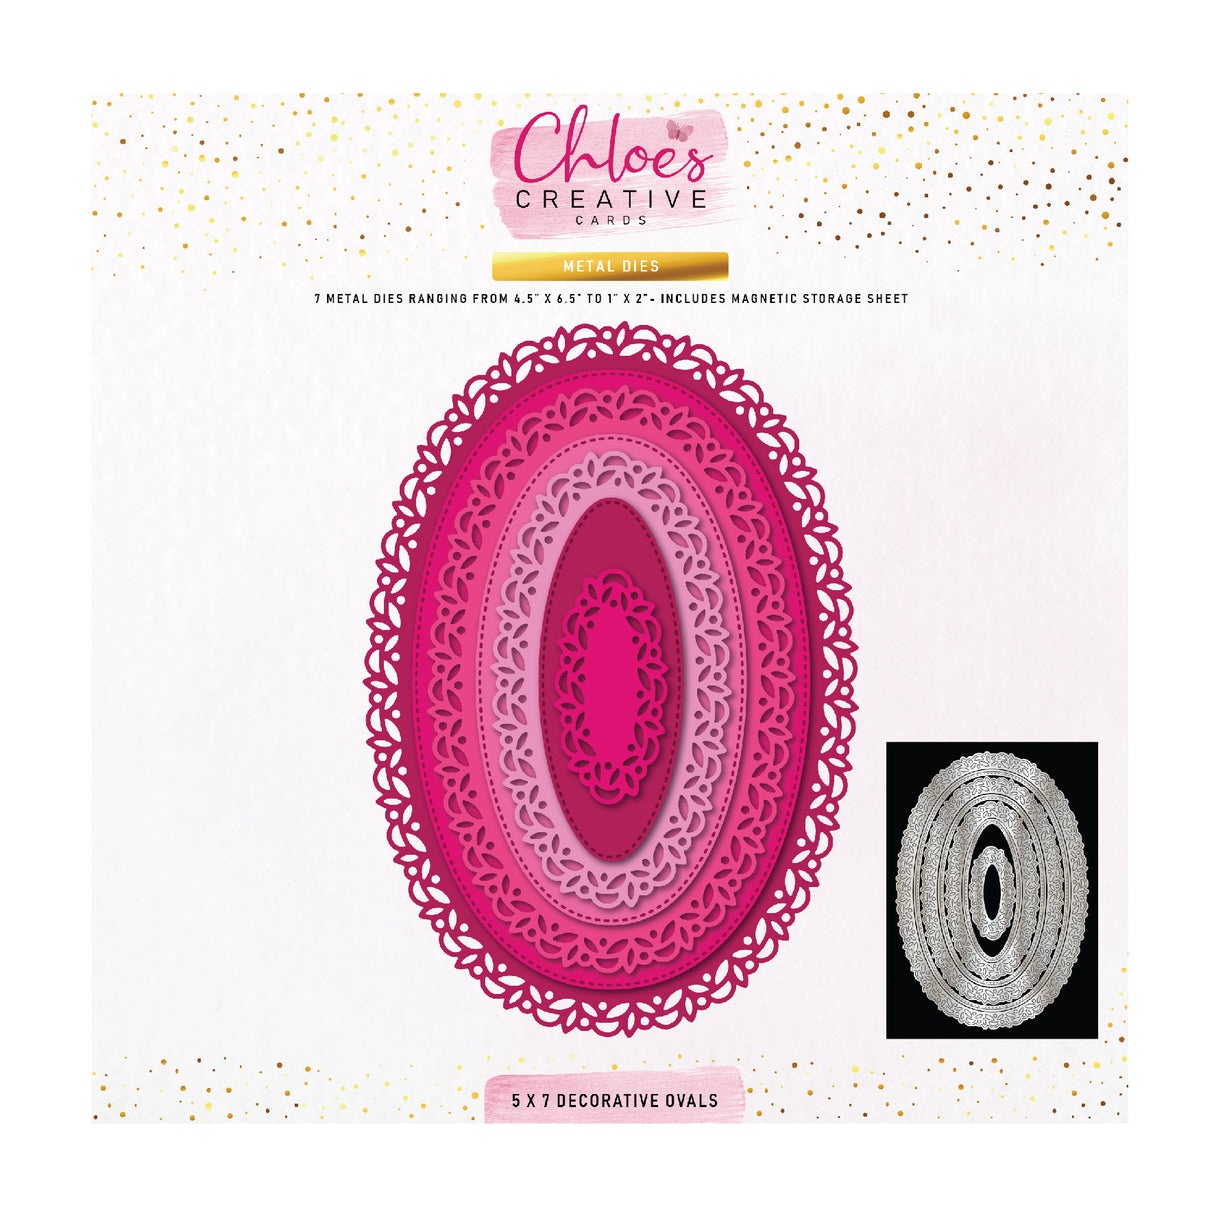 Chloes Creative Cards Metal Die Set - 5x7 Decorative Oval